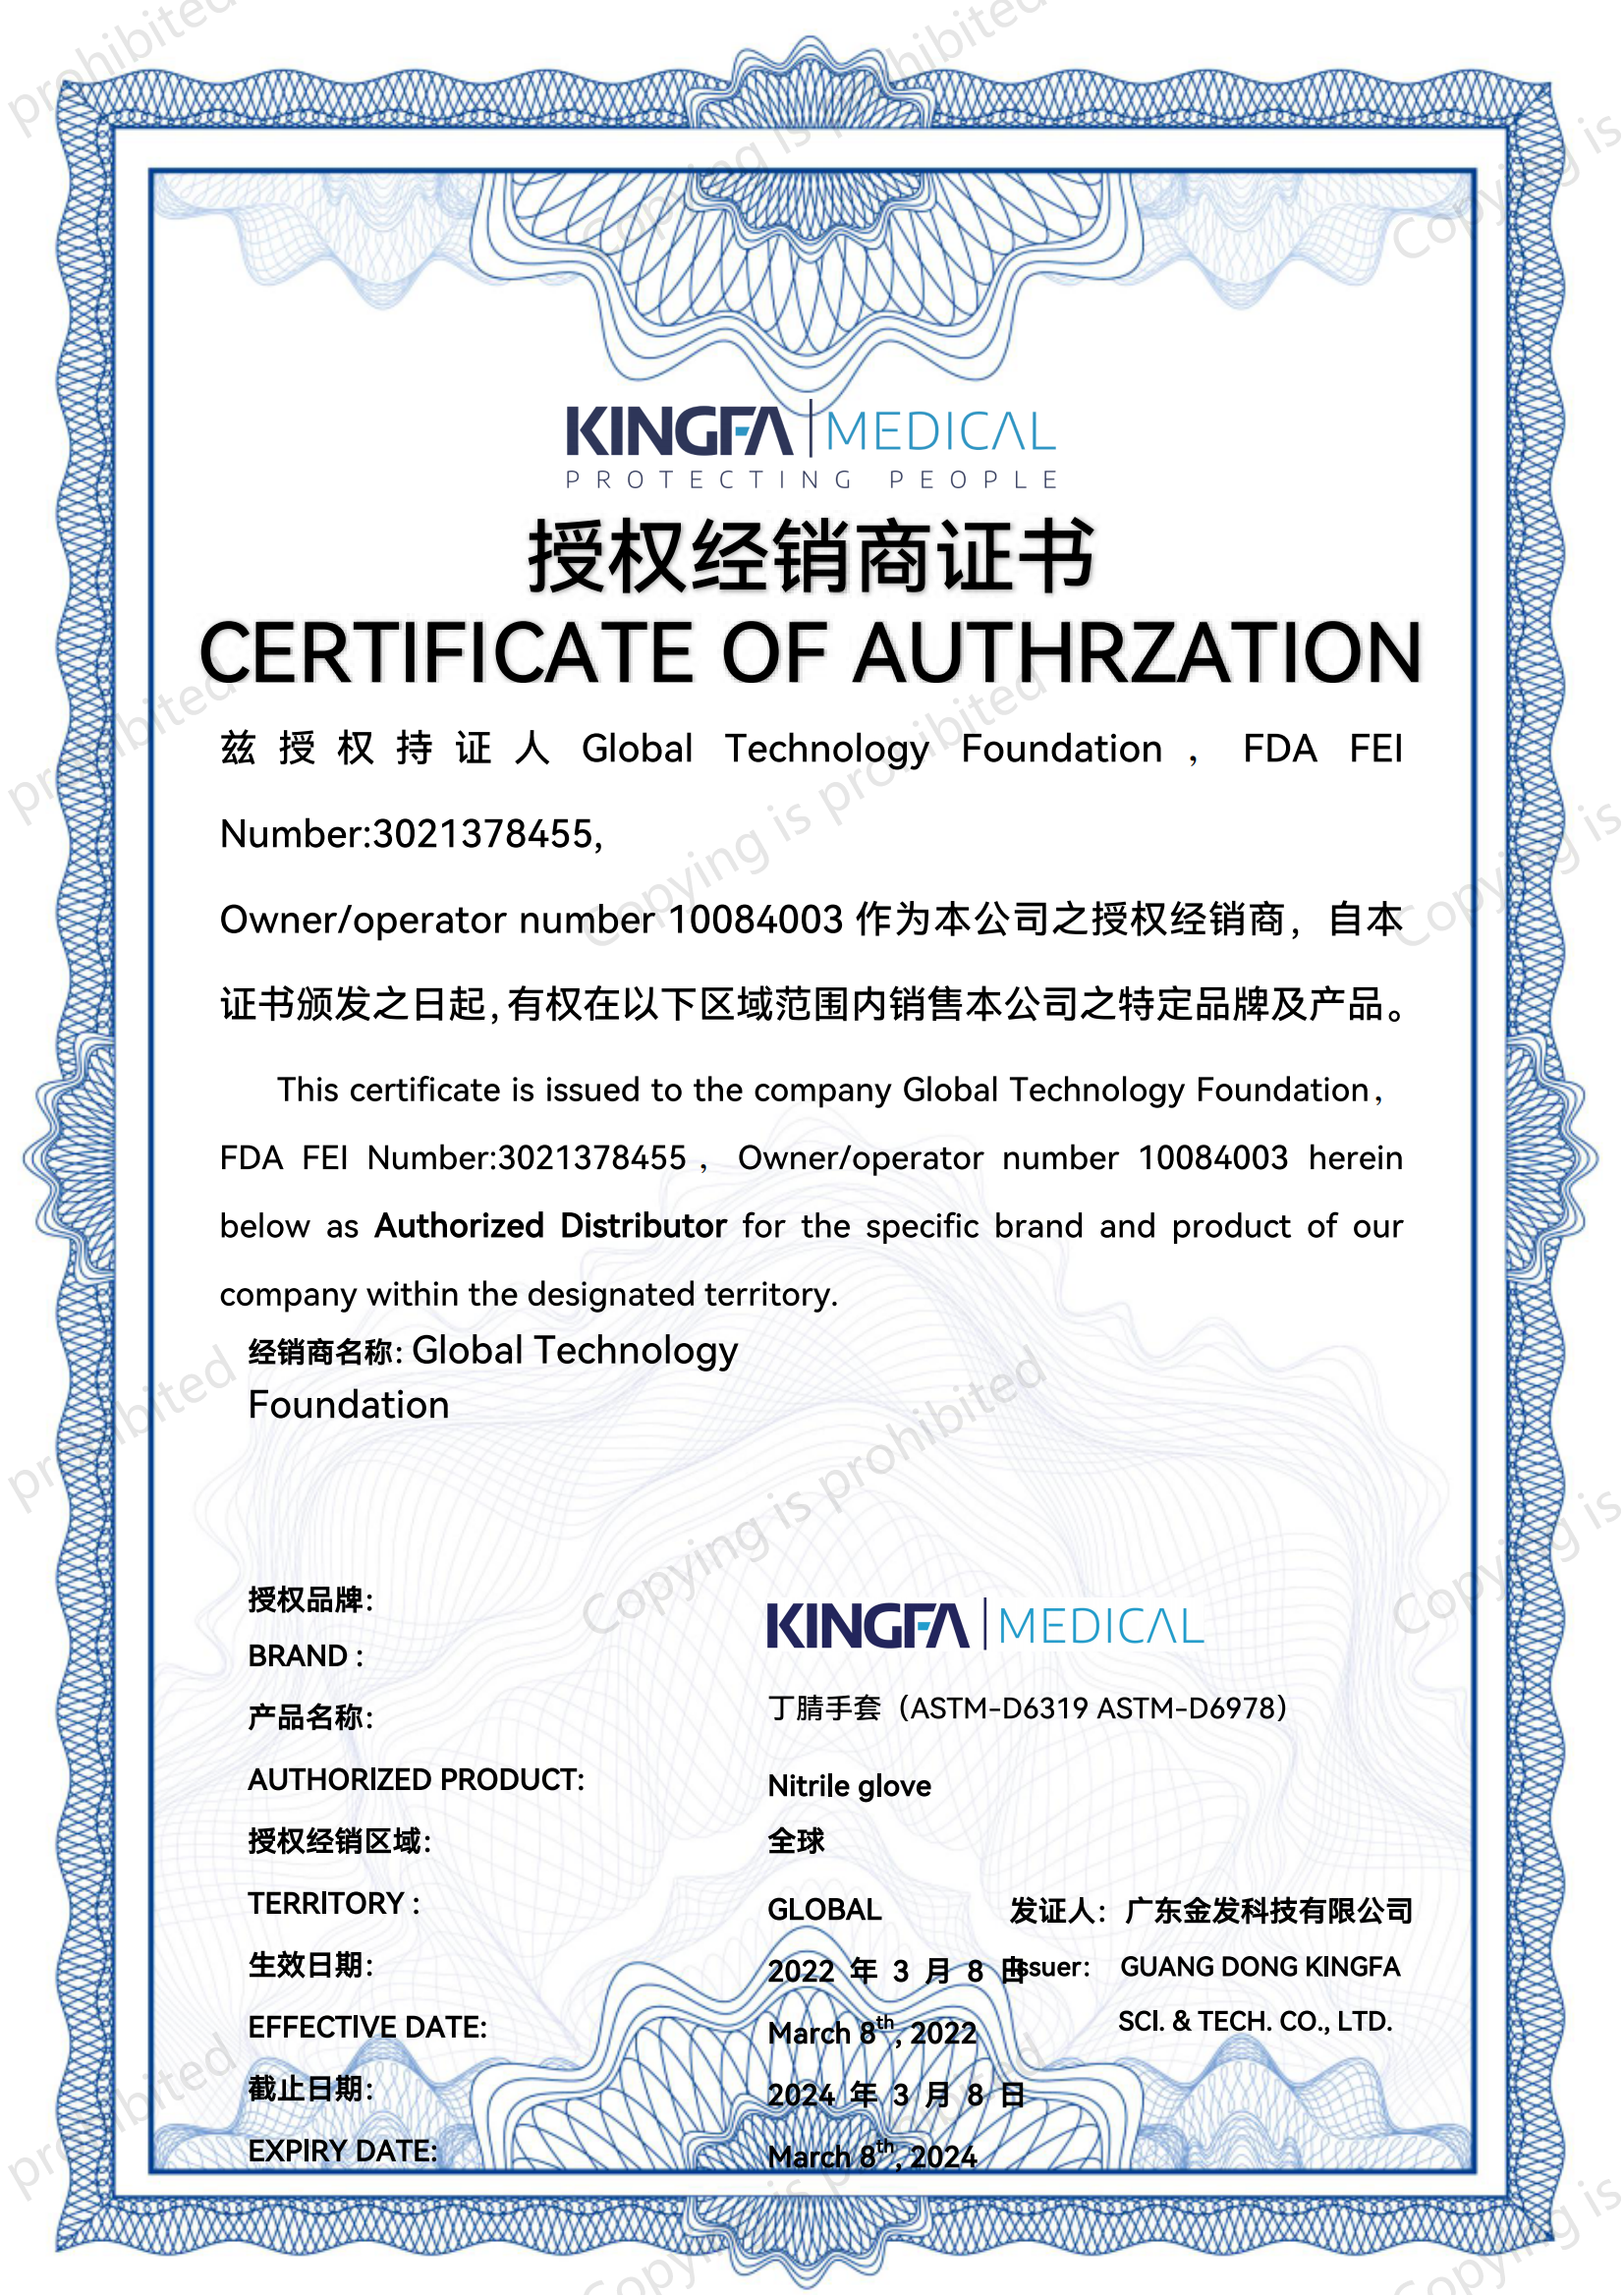 KINGFA authorizes Global Technology Foundation to sell medical gloves worldwide